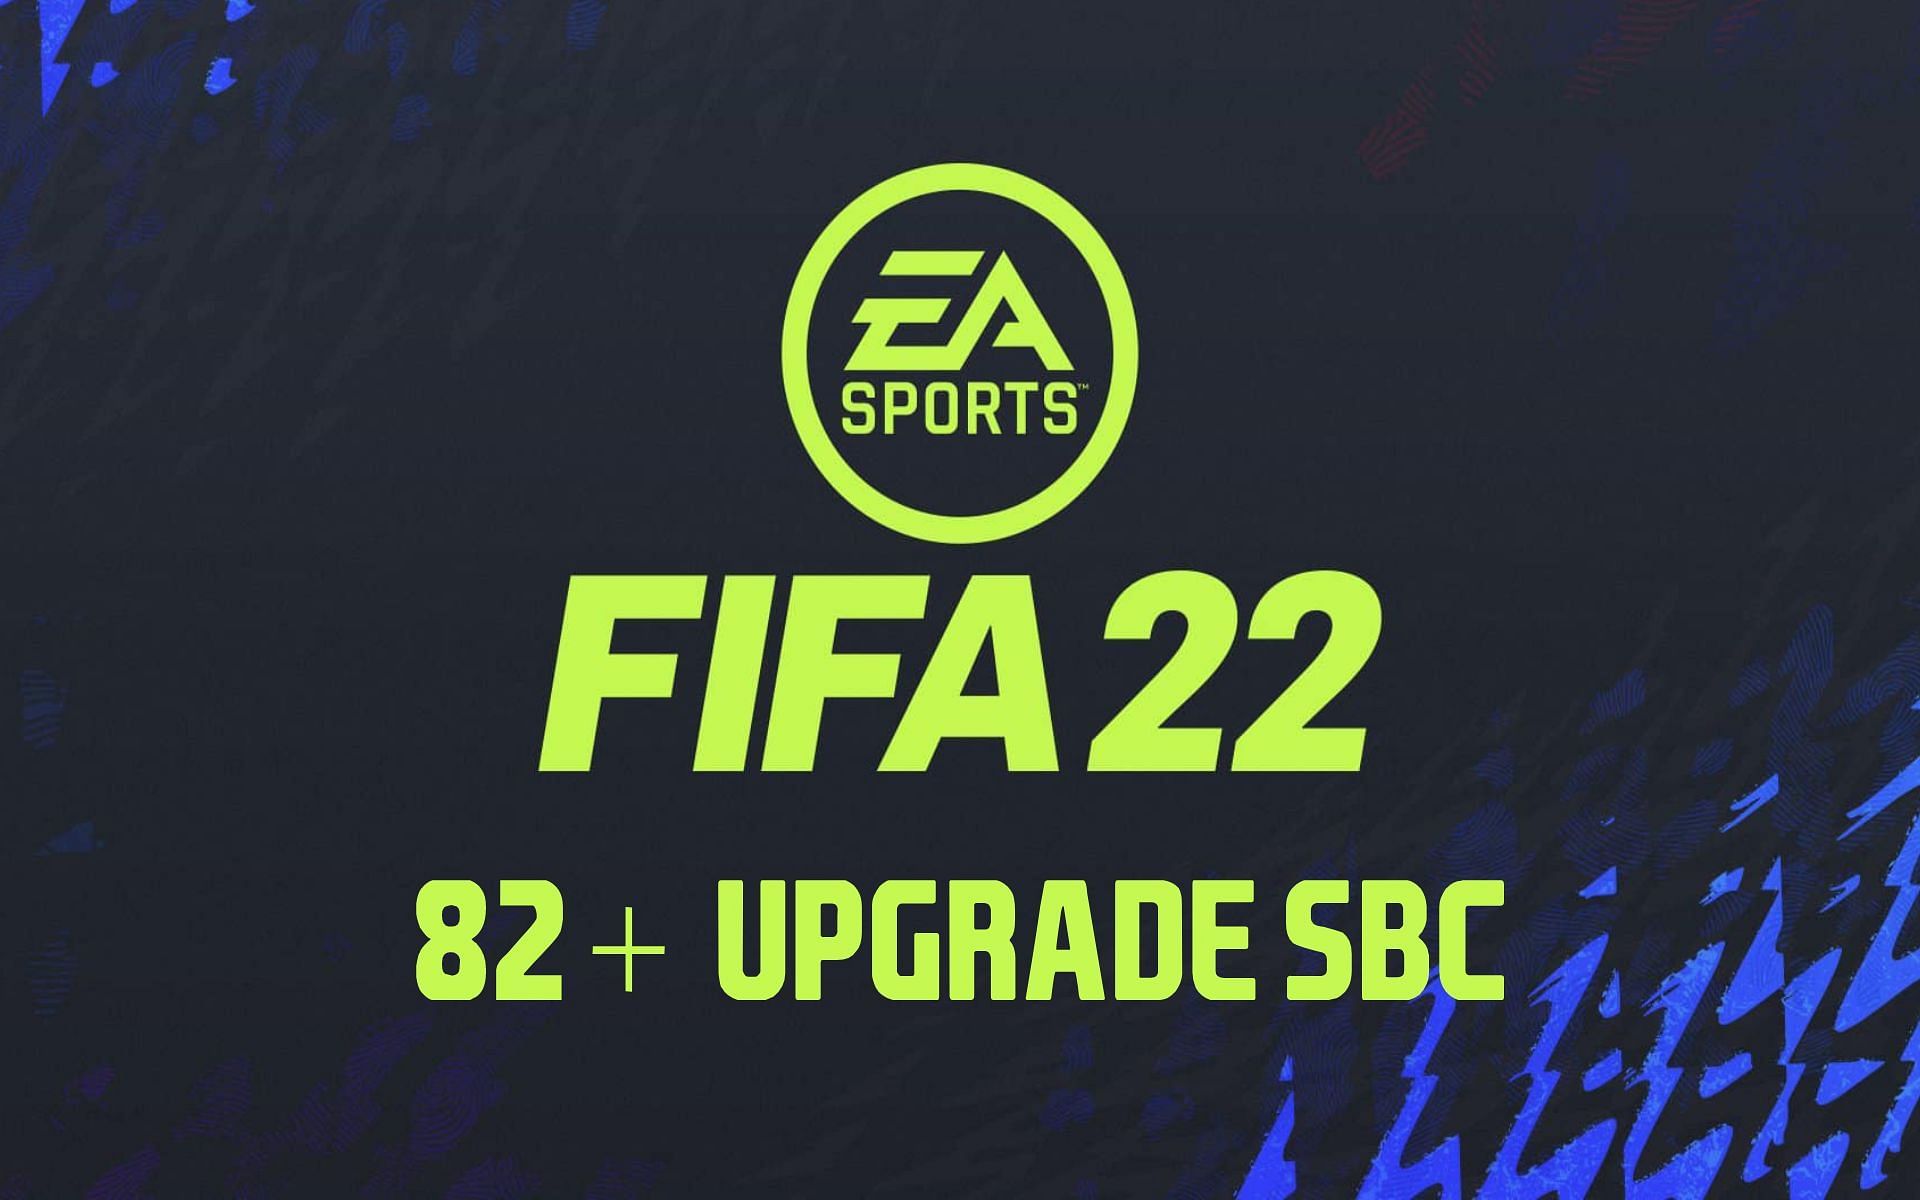 82+ Upgrade SBC in FIFA22 Ultimate Team (Image via Sportskeeda)